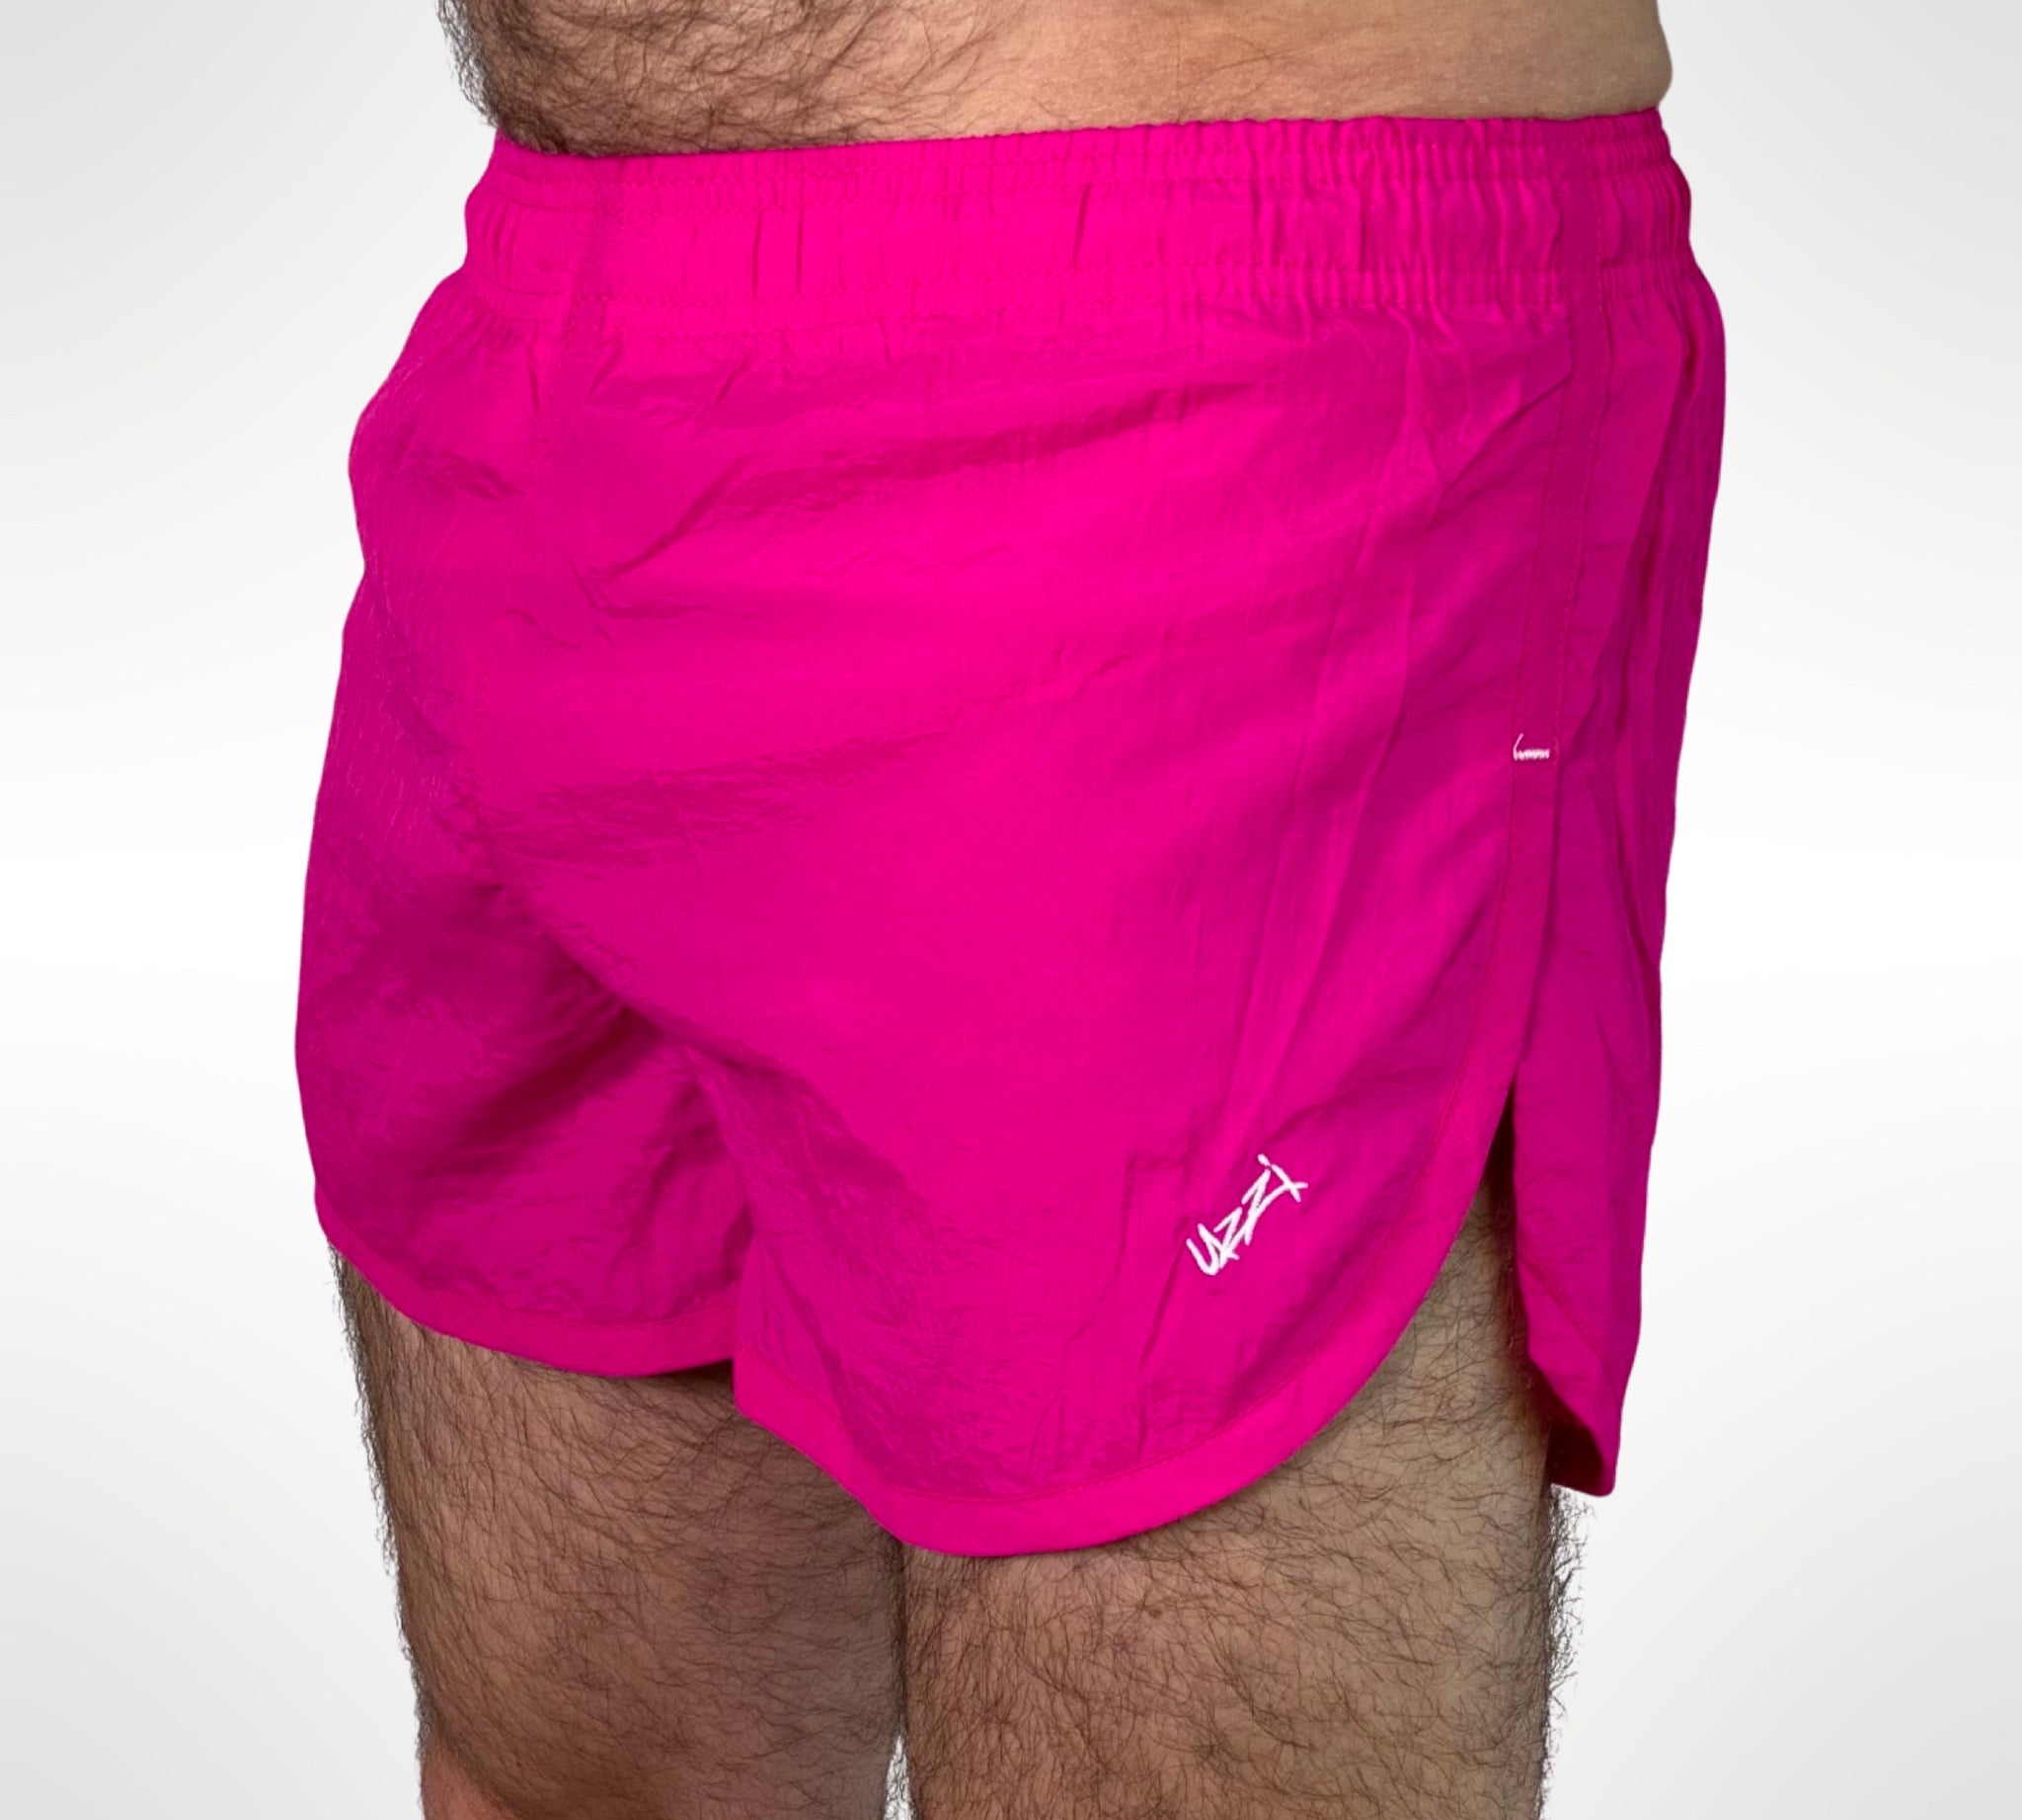 Uzzi Running shorts Neon Fuchsia